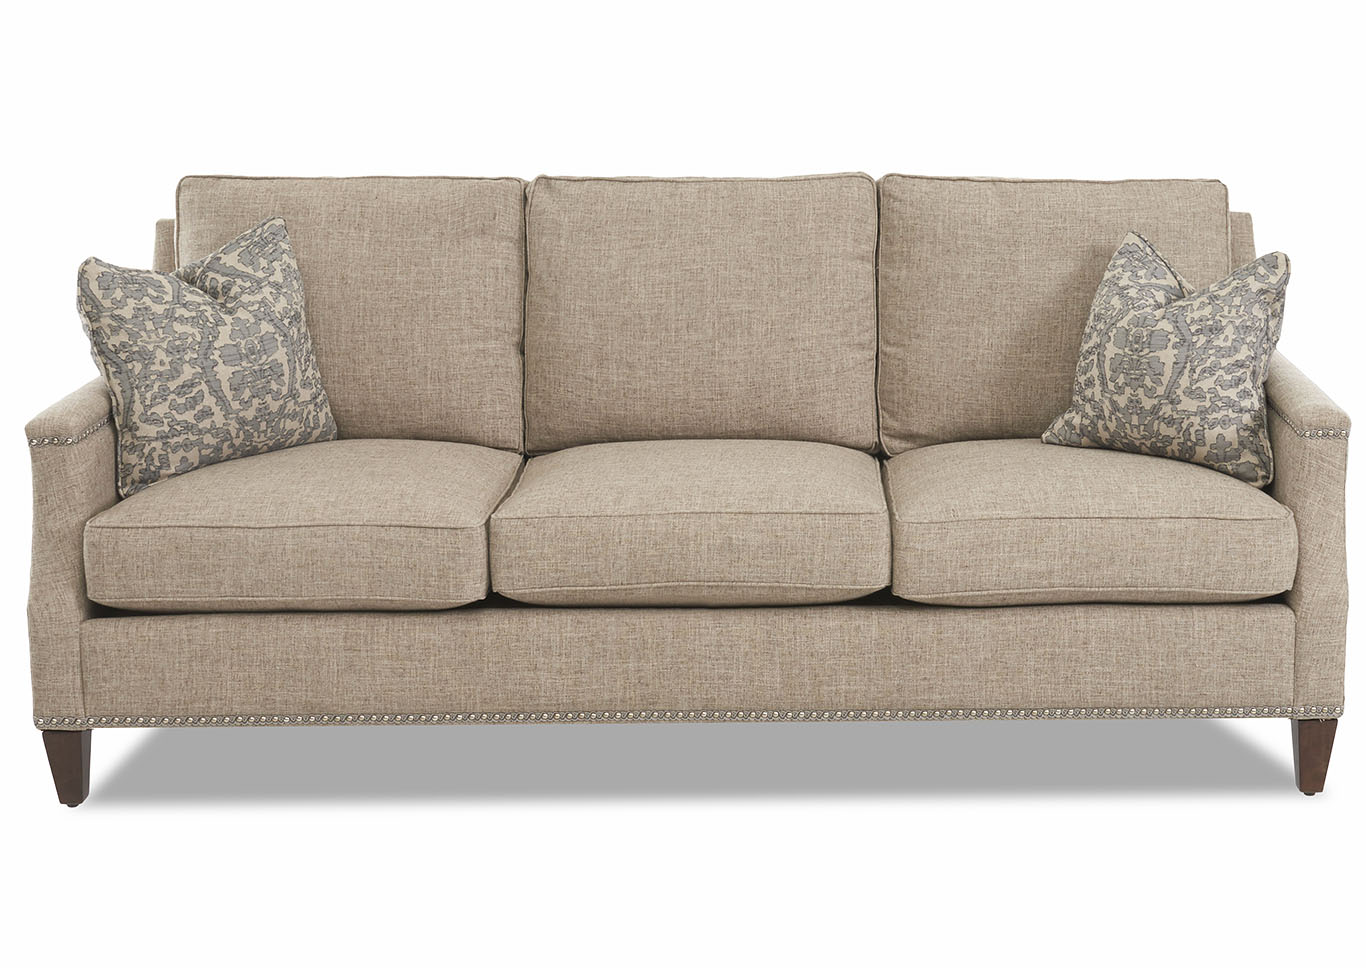 Bond Zula Linen Stationary Fabric Sofa,Klaussner Home Furnishings